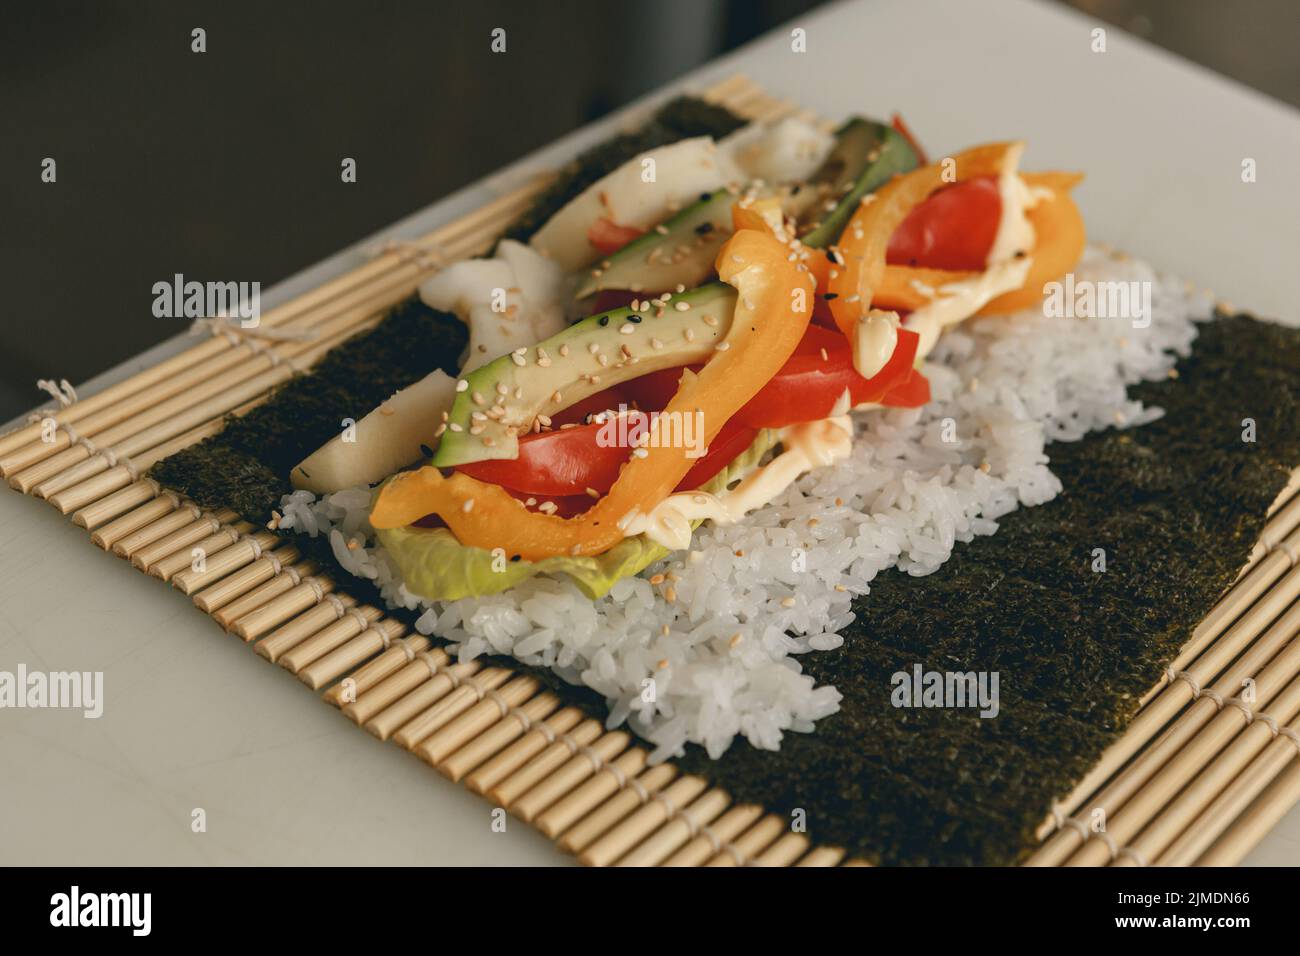 Process of preparing vegan sushi roll futomaki with pepper cucumber and avocado salad Stock Photo